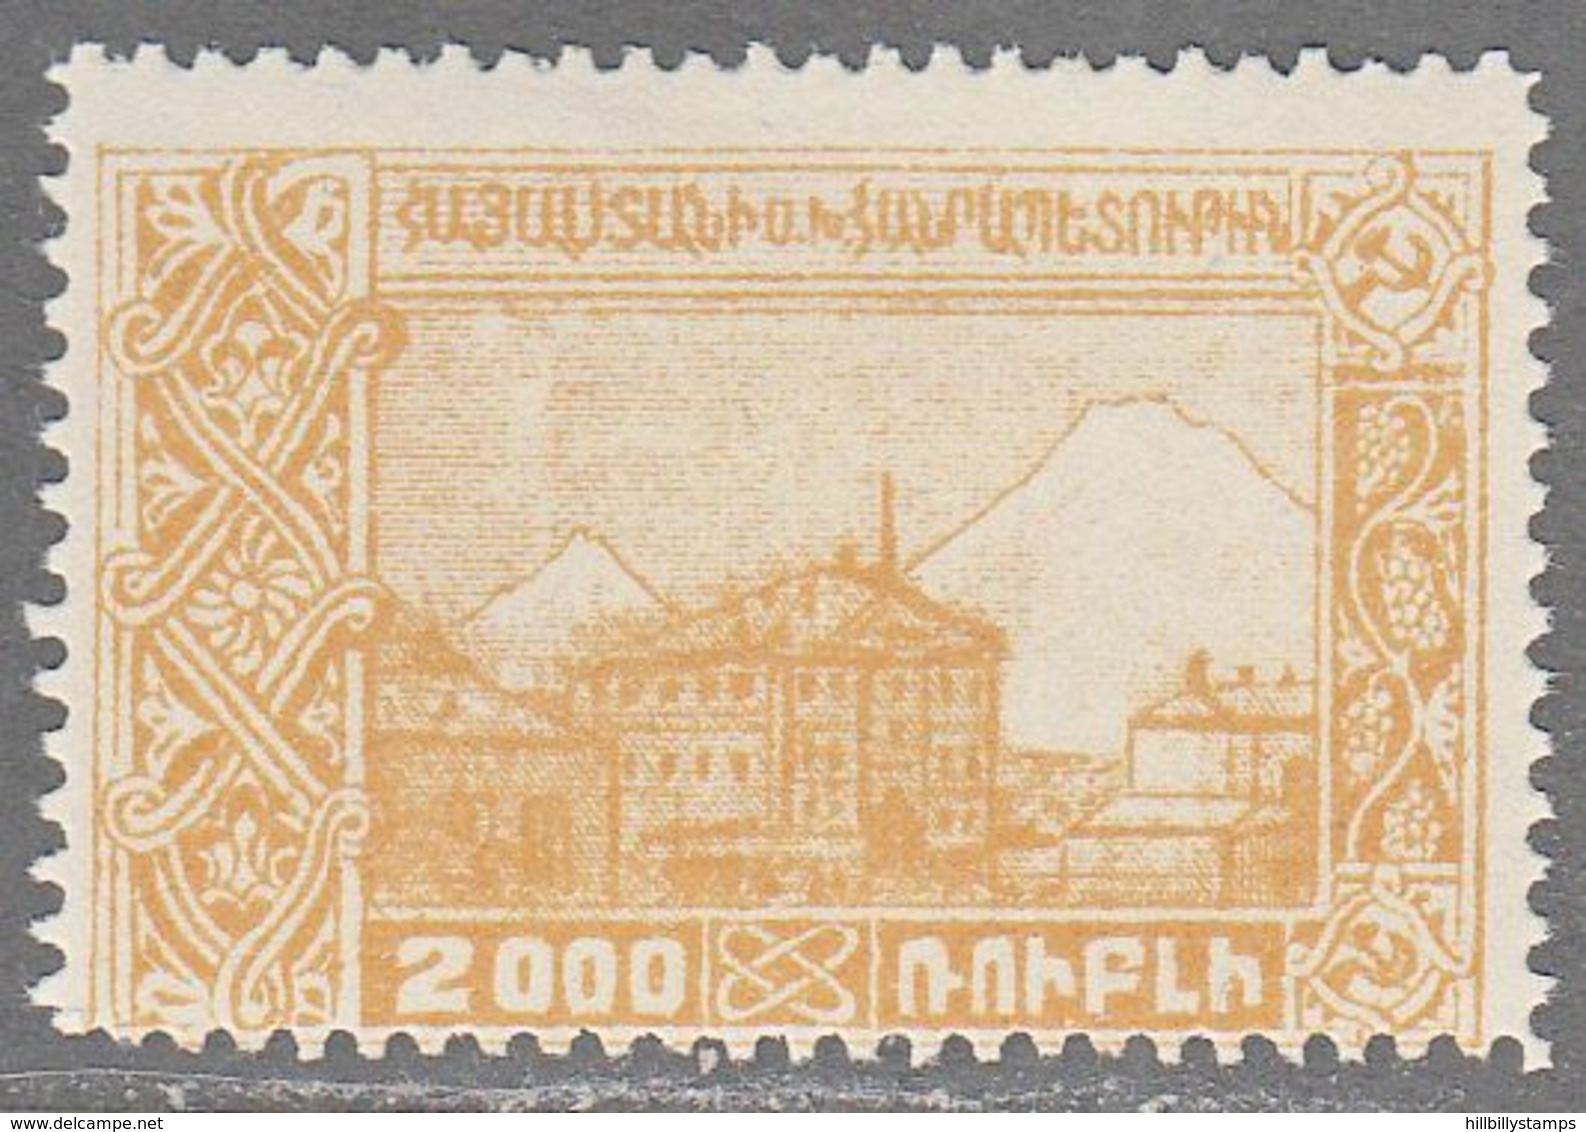 ARMENIA   SCOTT NO. 288   MINT HINGED   YEAR  1921 - Arménie